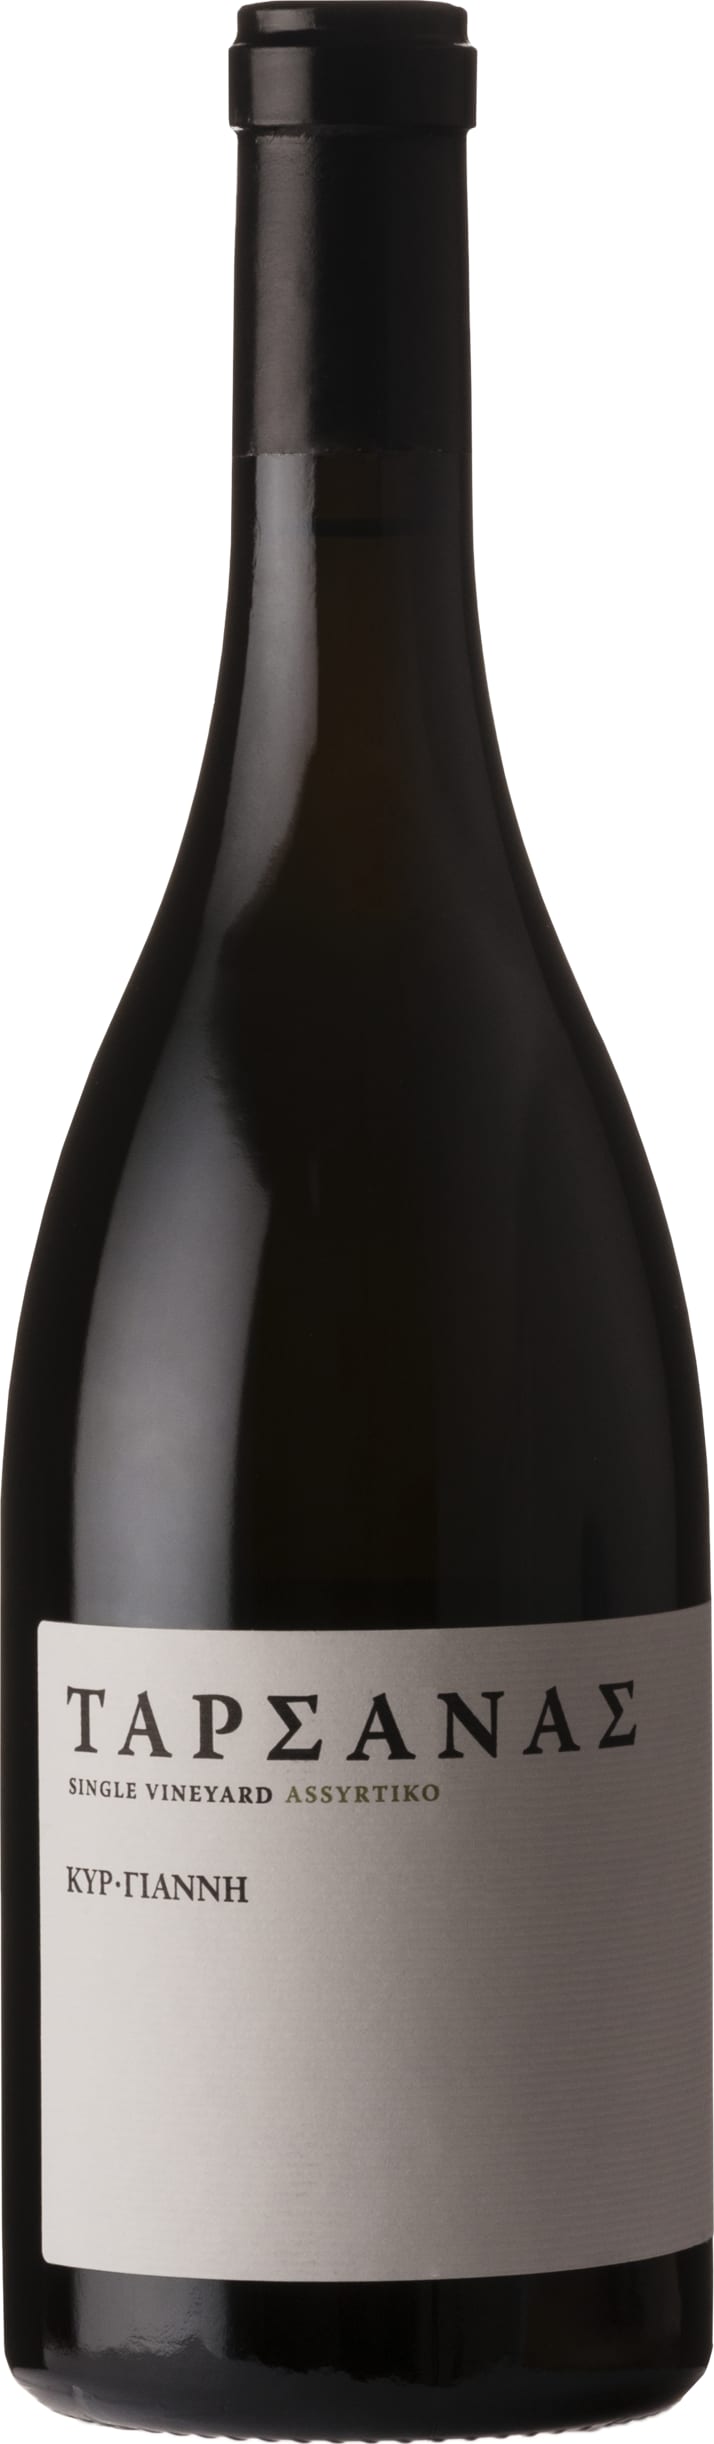 Kir-Yianni Tarsanas Single Vineyard Assyrtiko 2021 75cl - Buy Kir-Yianni Wines from GREAT WINES DIRECT wine shop